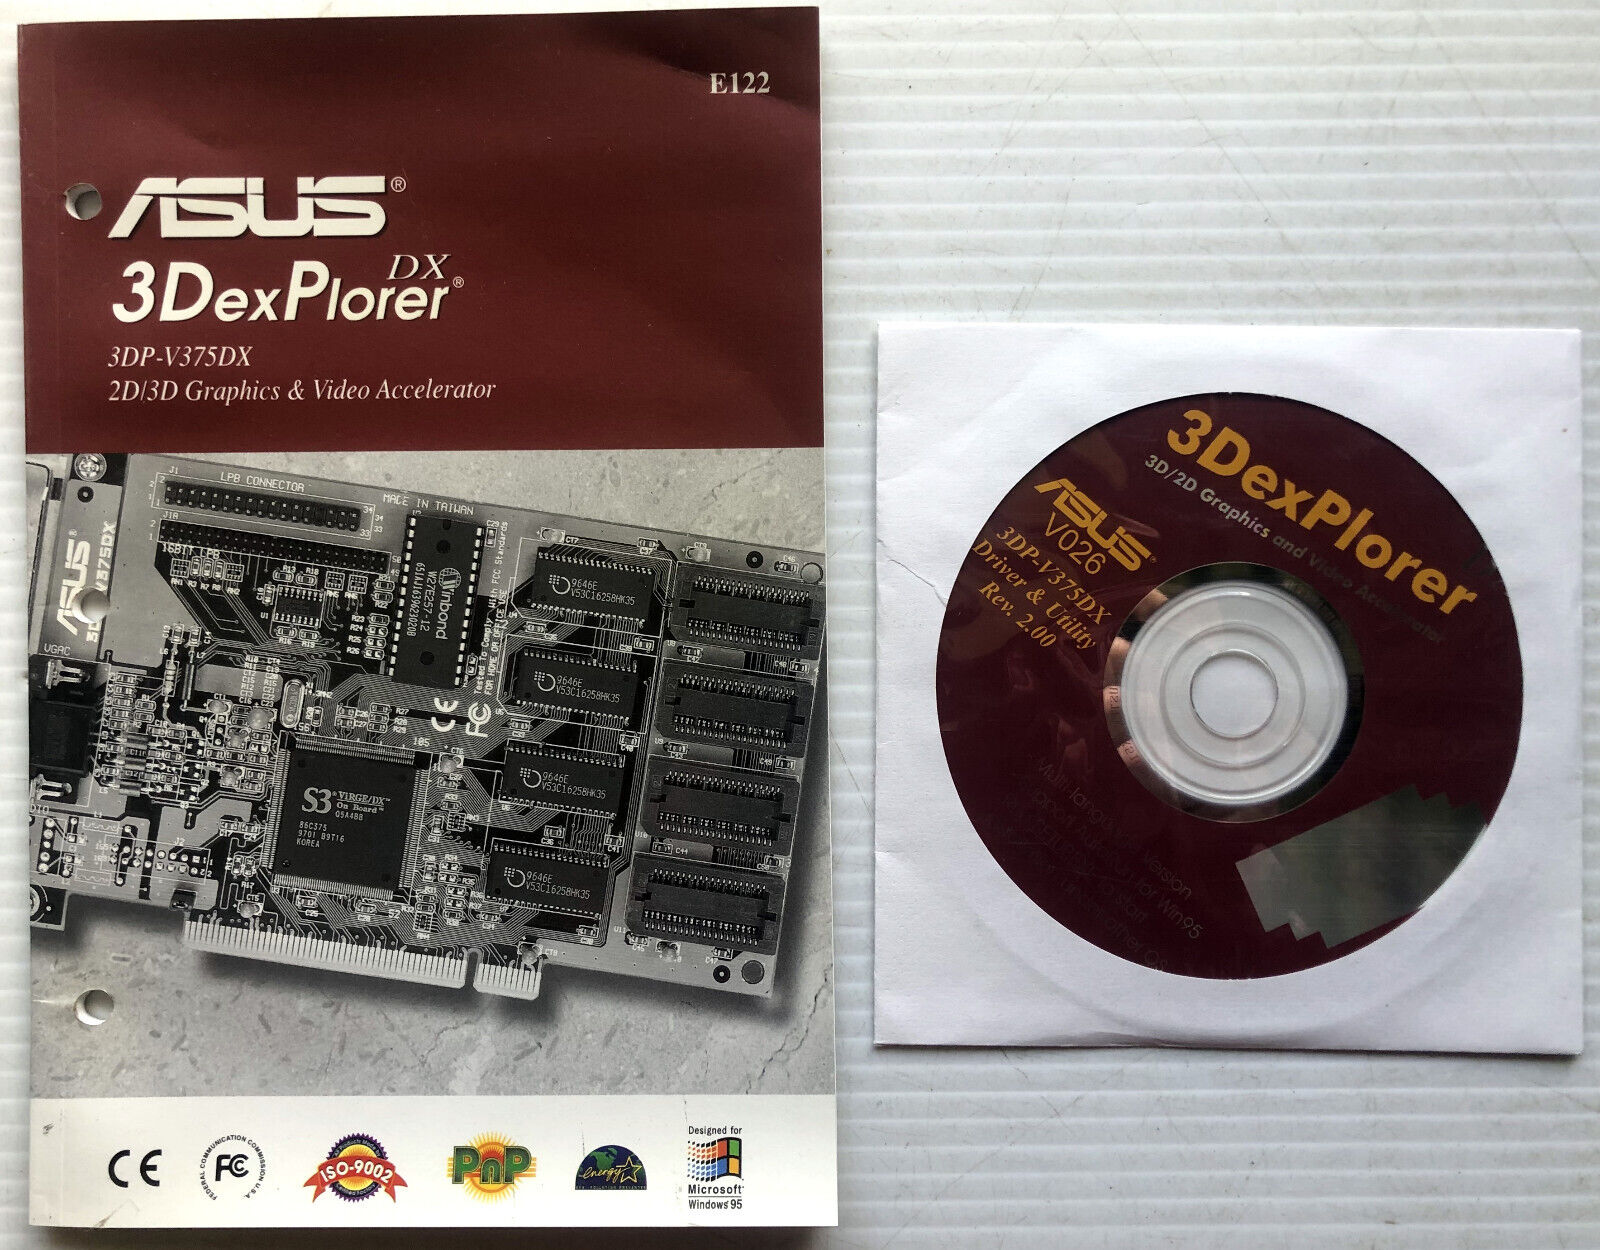 ASUS 3DexPlorer DX 3Dp-V375DX 2D/3D Graphics Video Card Manual & Drivers CD-ROM